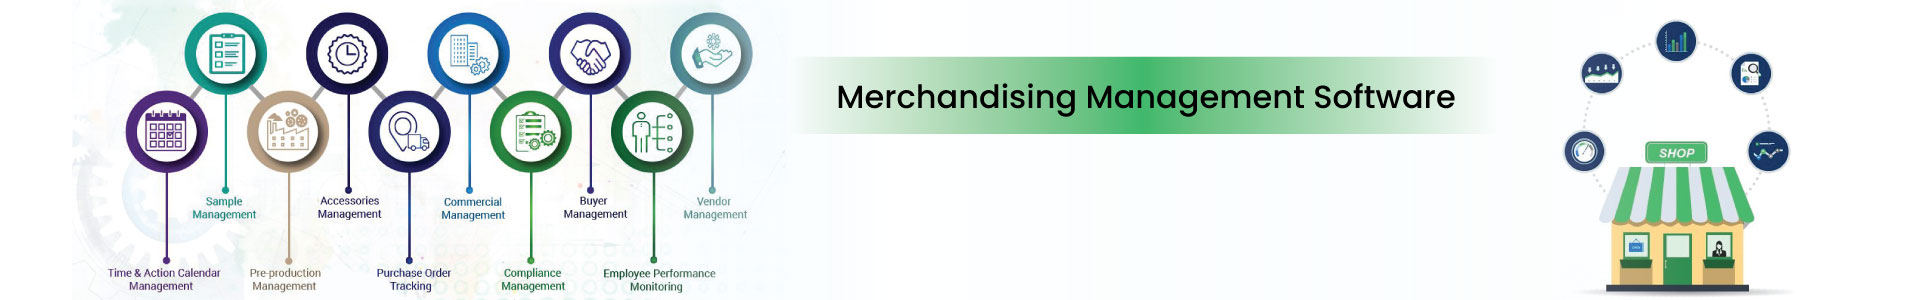 Merchandising-Management-Software